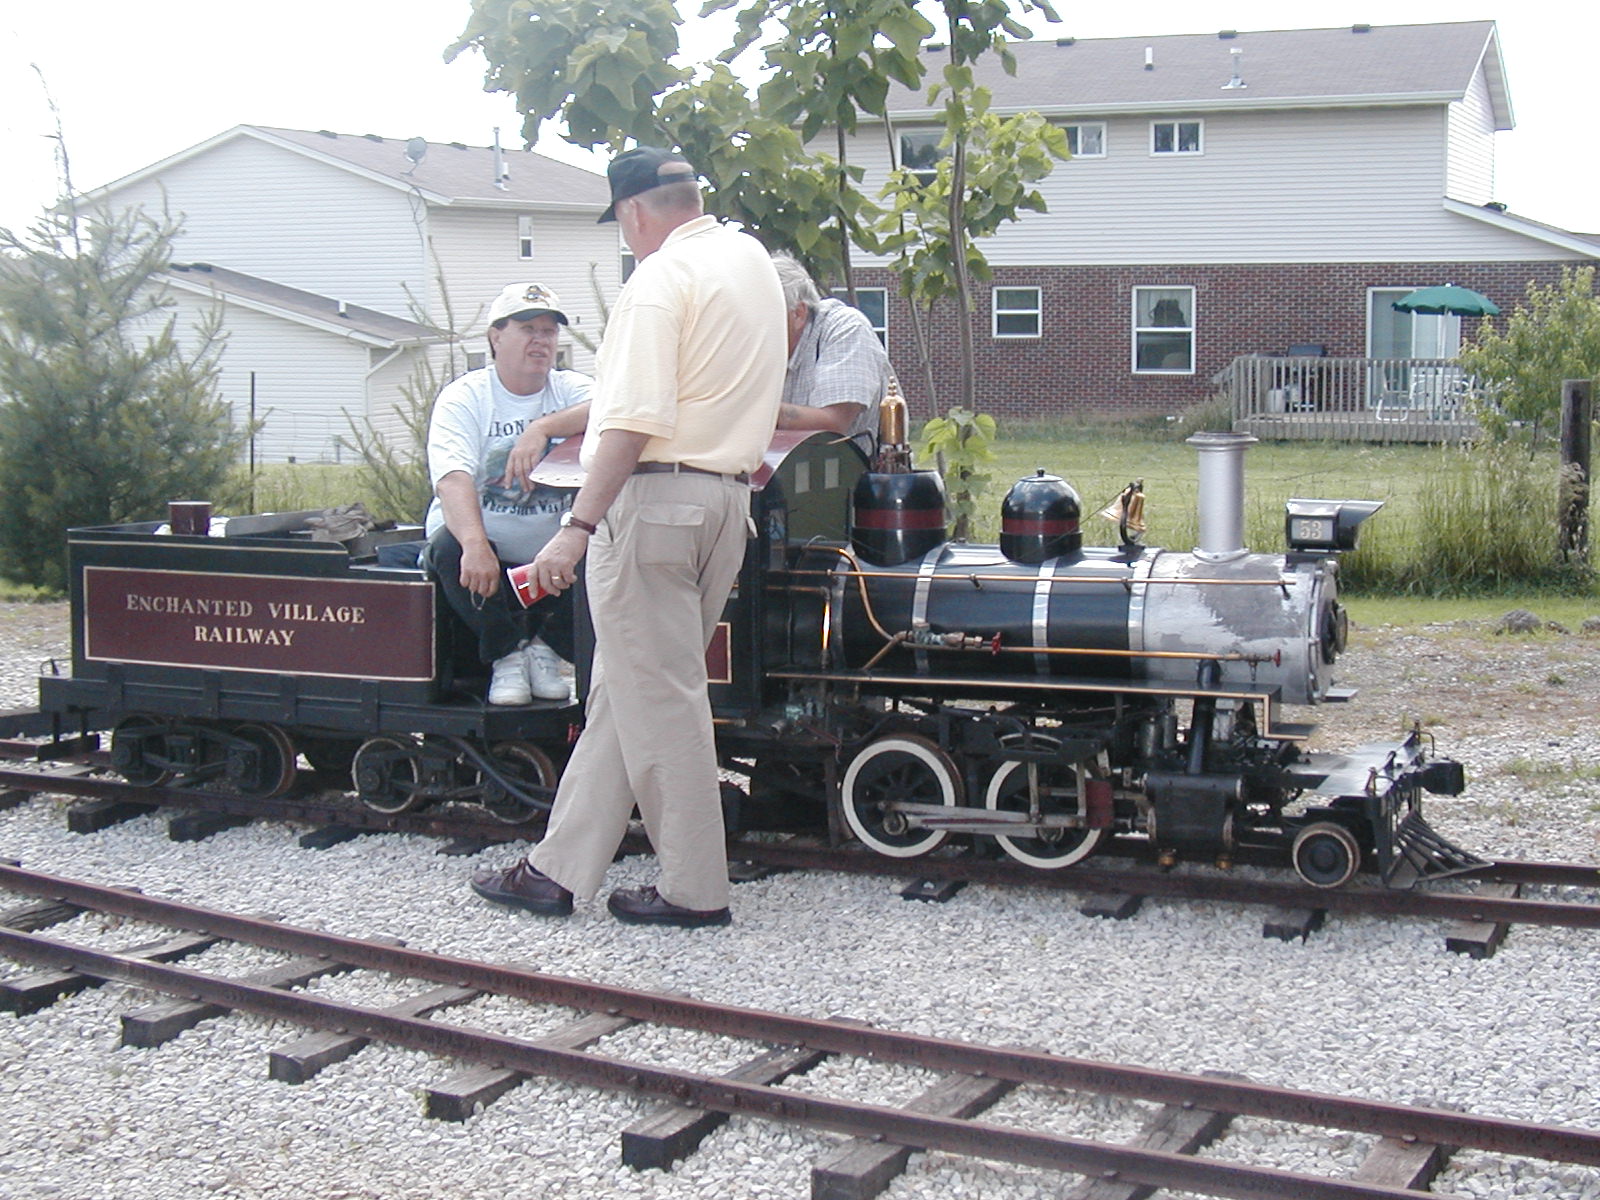 Steam locomotive engine photo